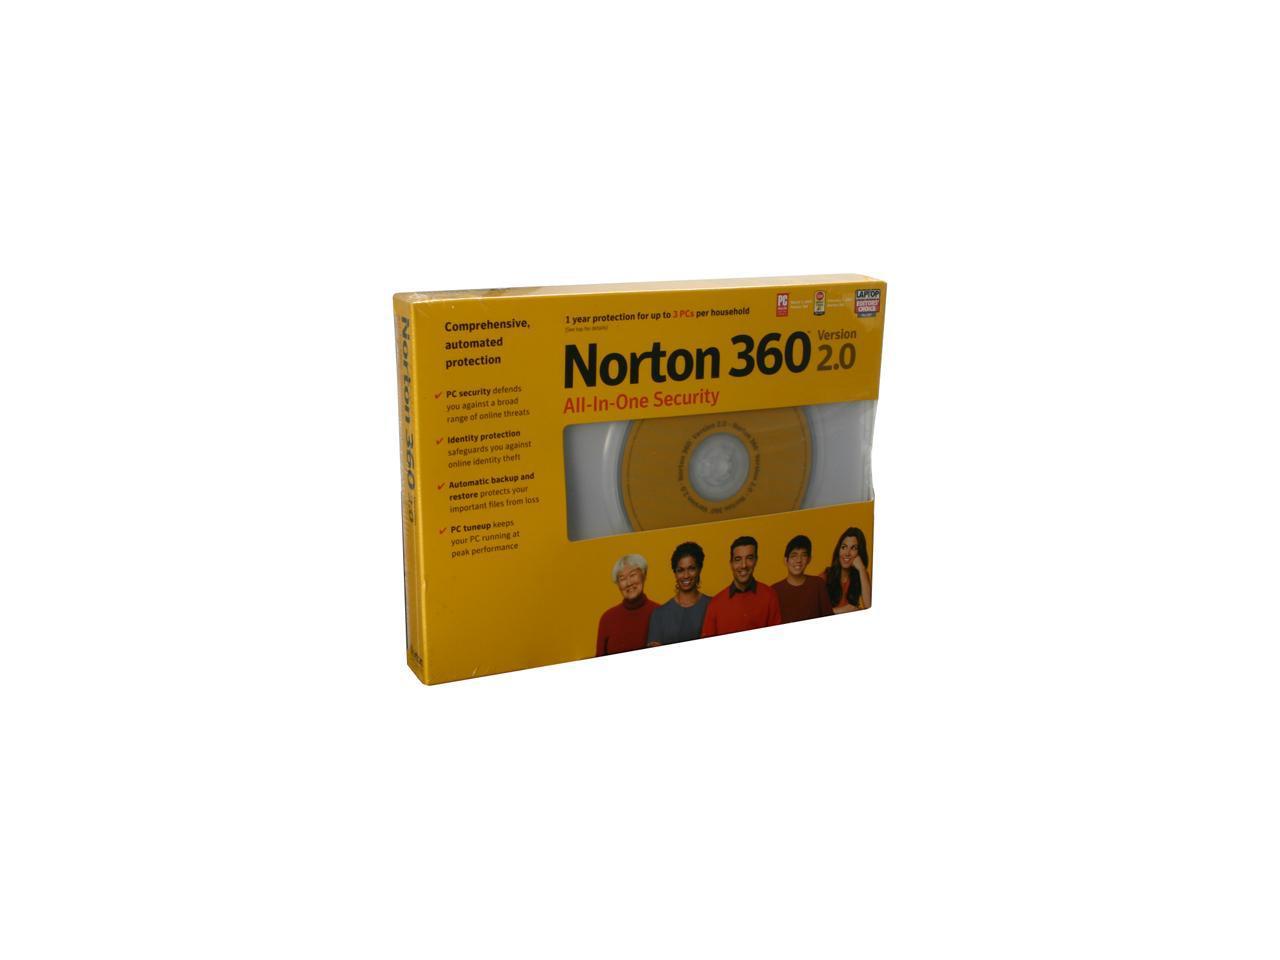 reinstall norton 360